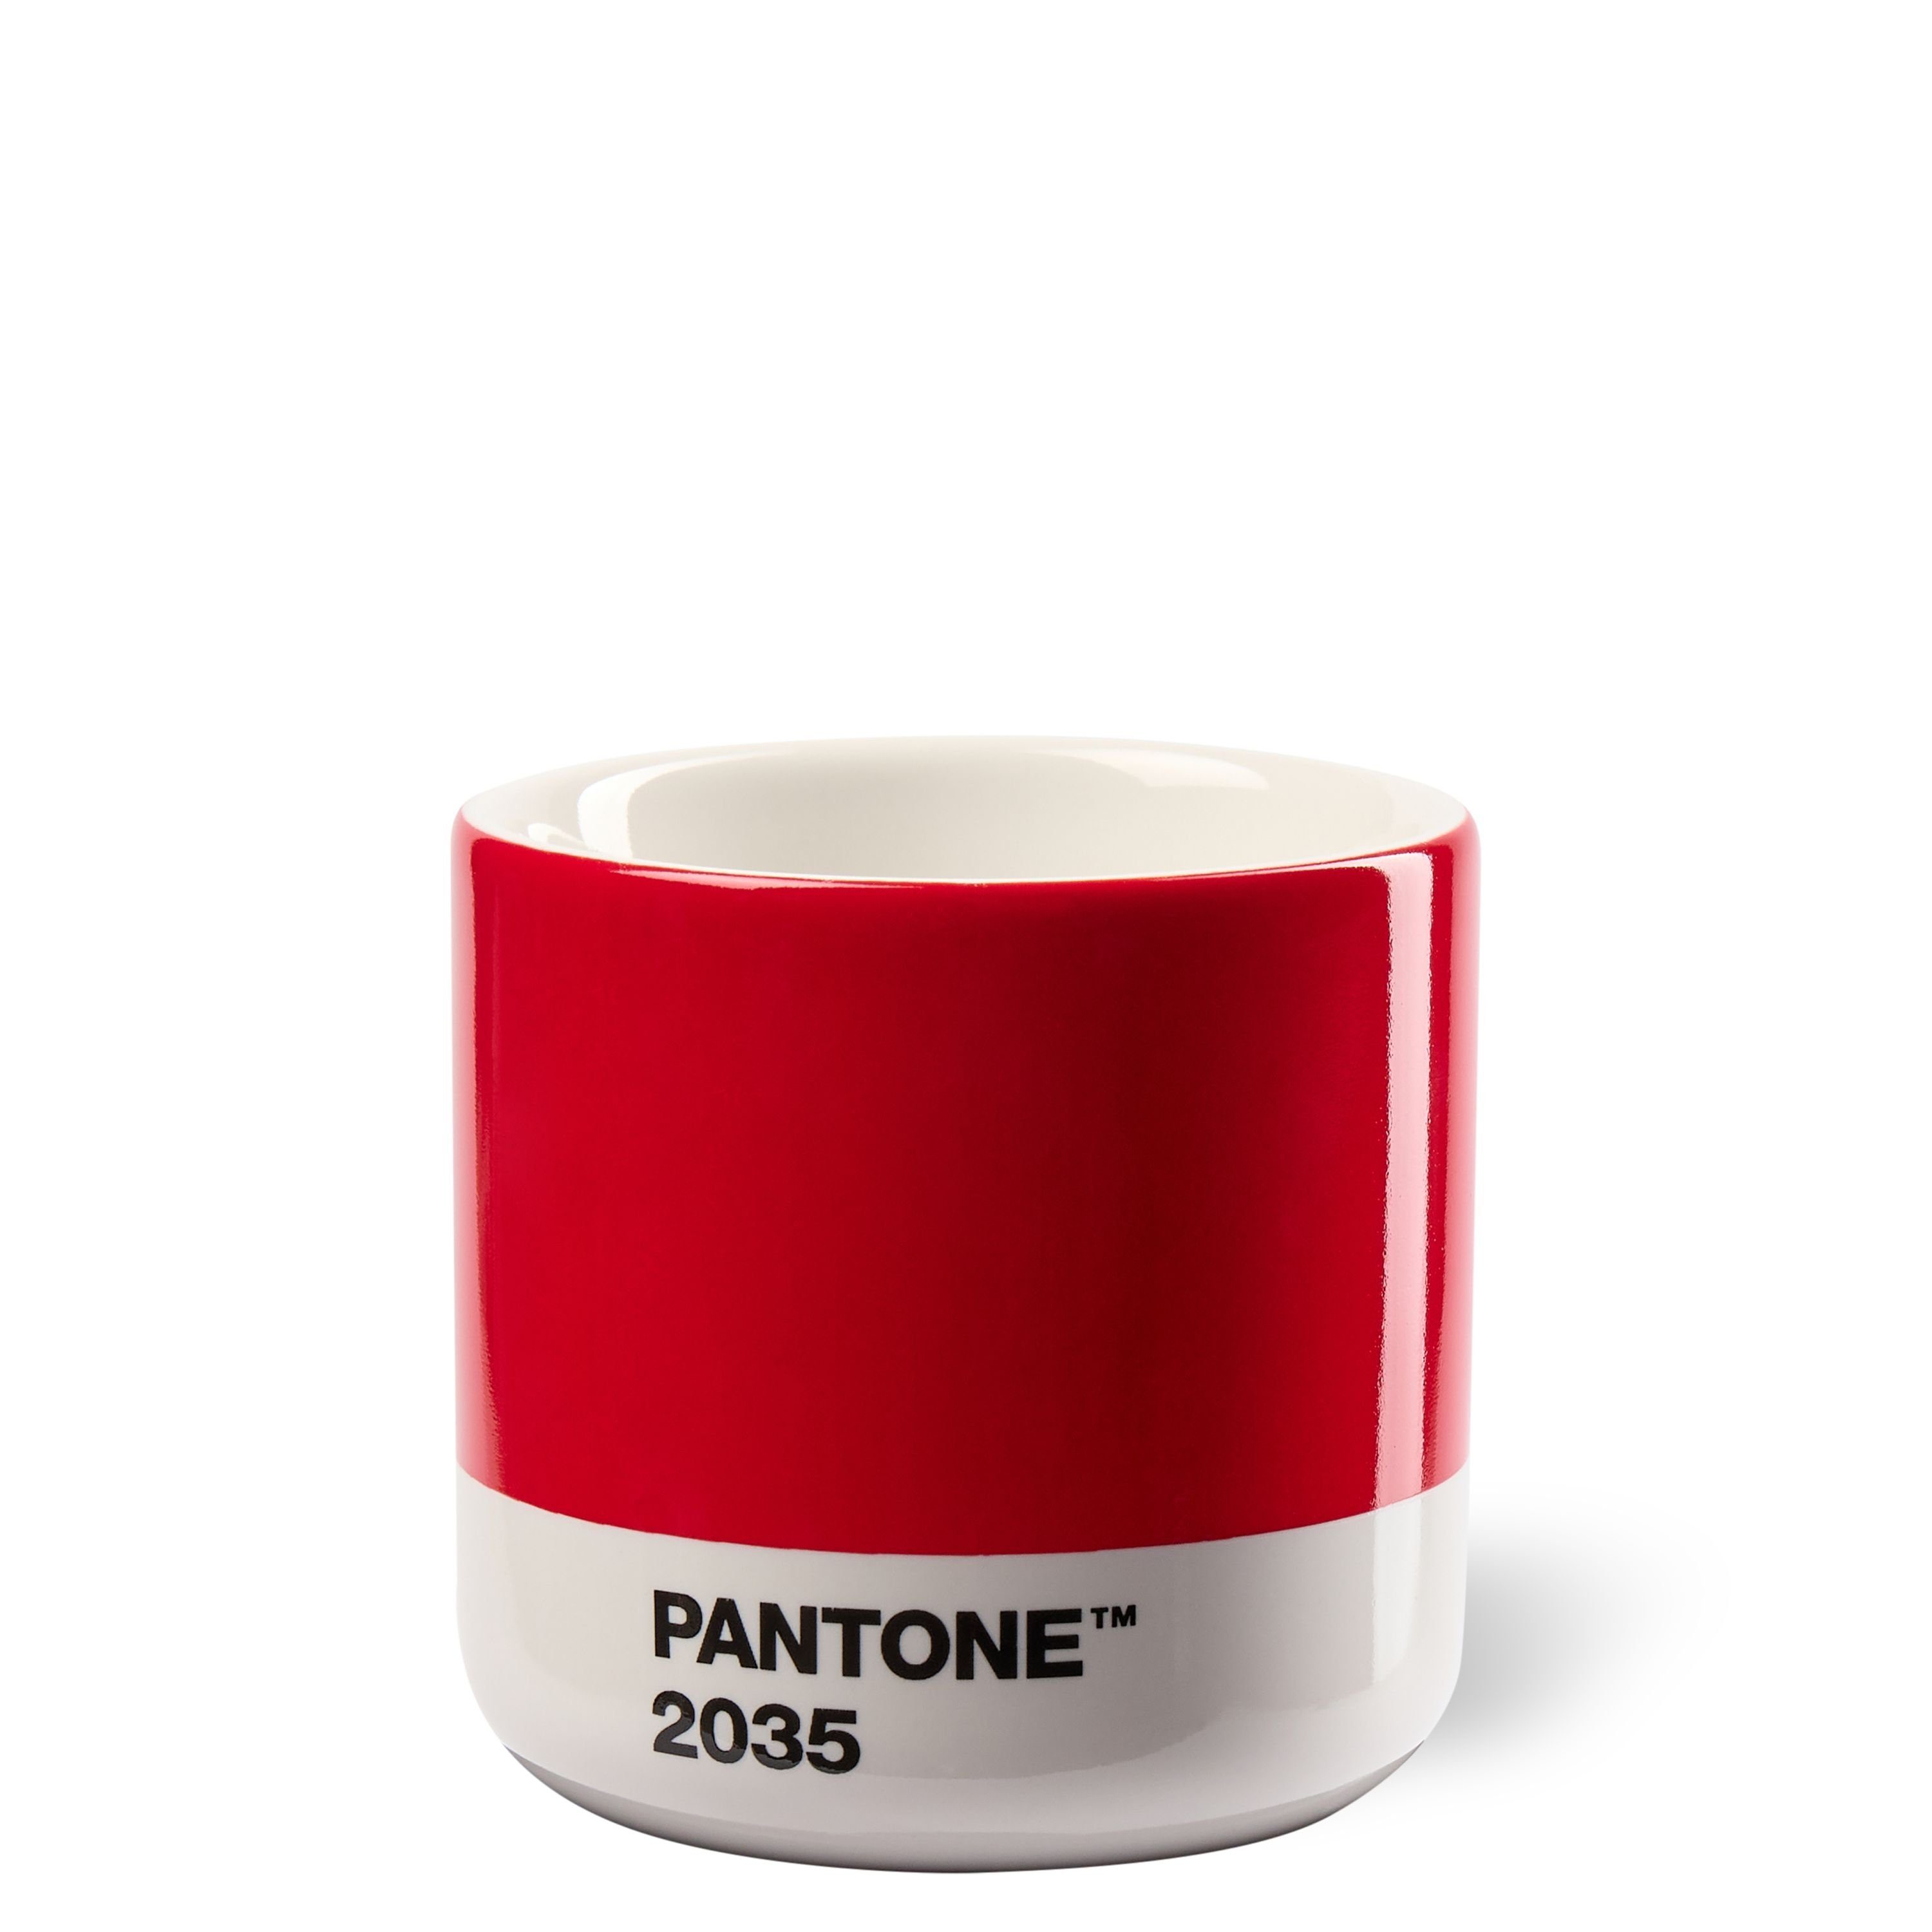 C 2035 Red PANTONE PANTONE Macchiato Thermobecher Kaffeeservice, Porzellan